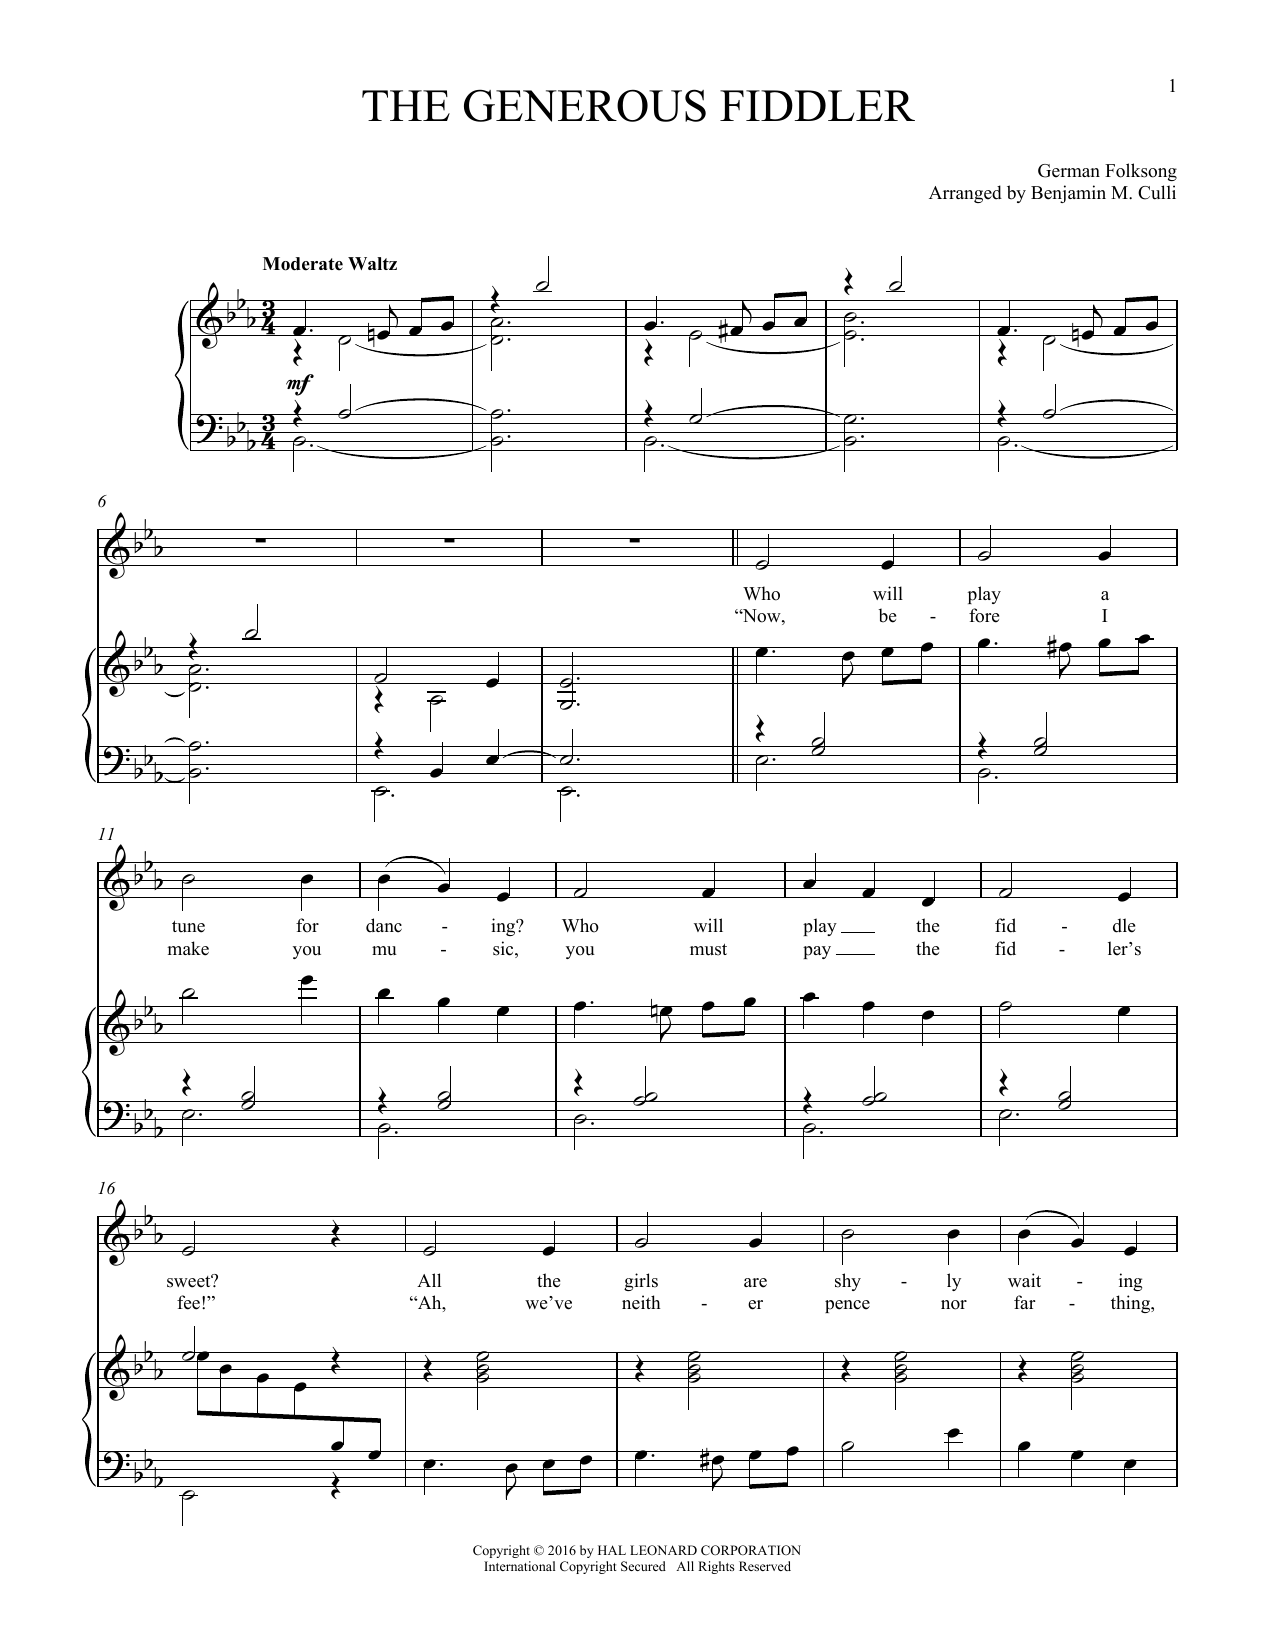 Download German Folk Song The Generous Fiddler Sheet Music